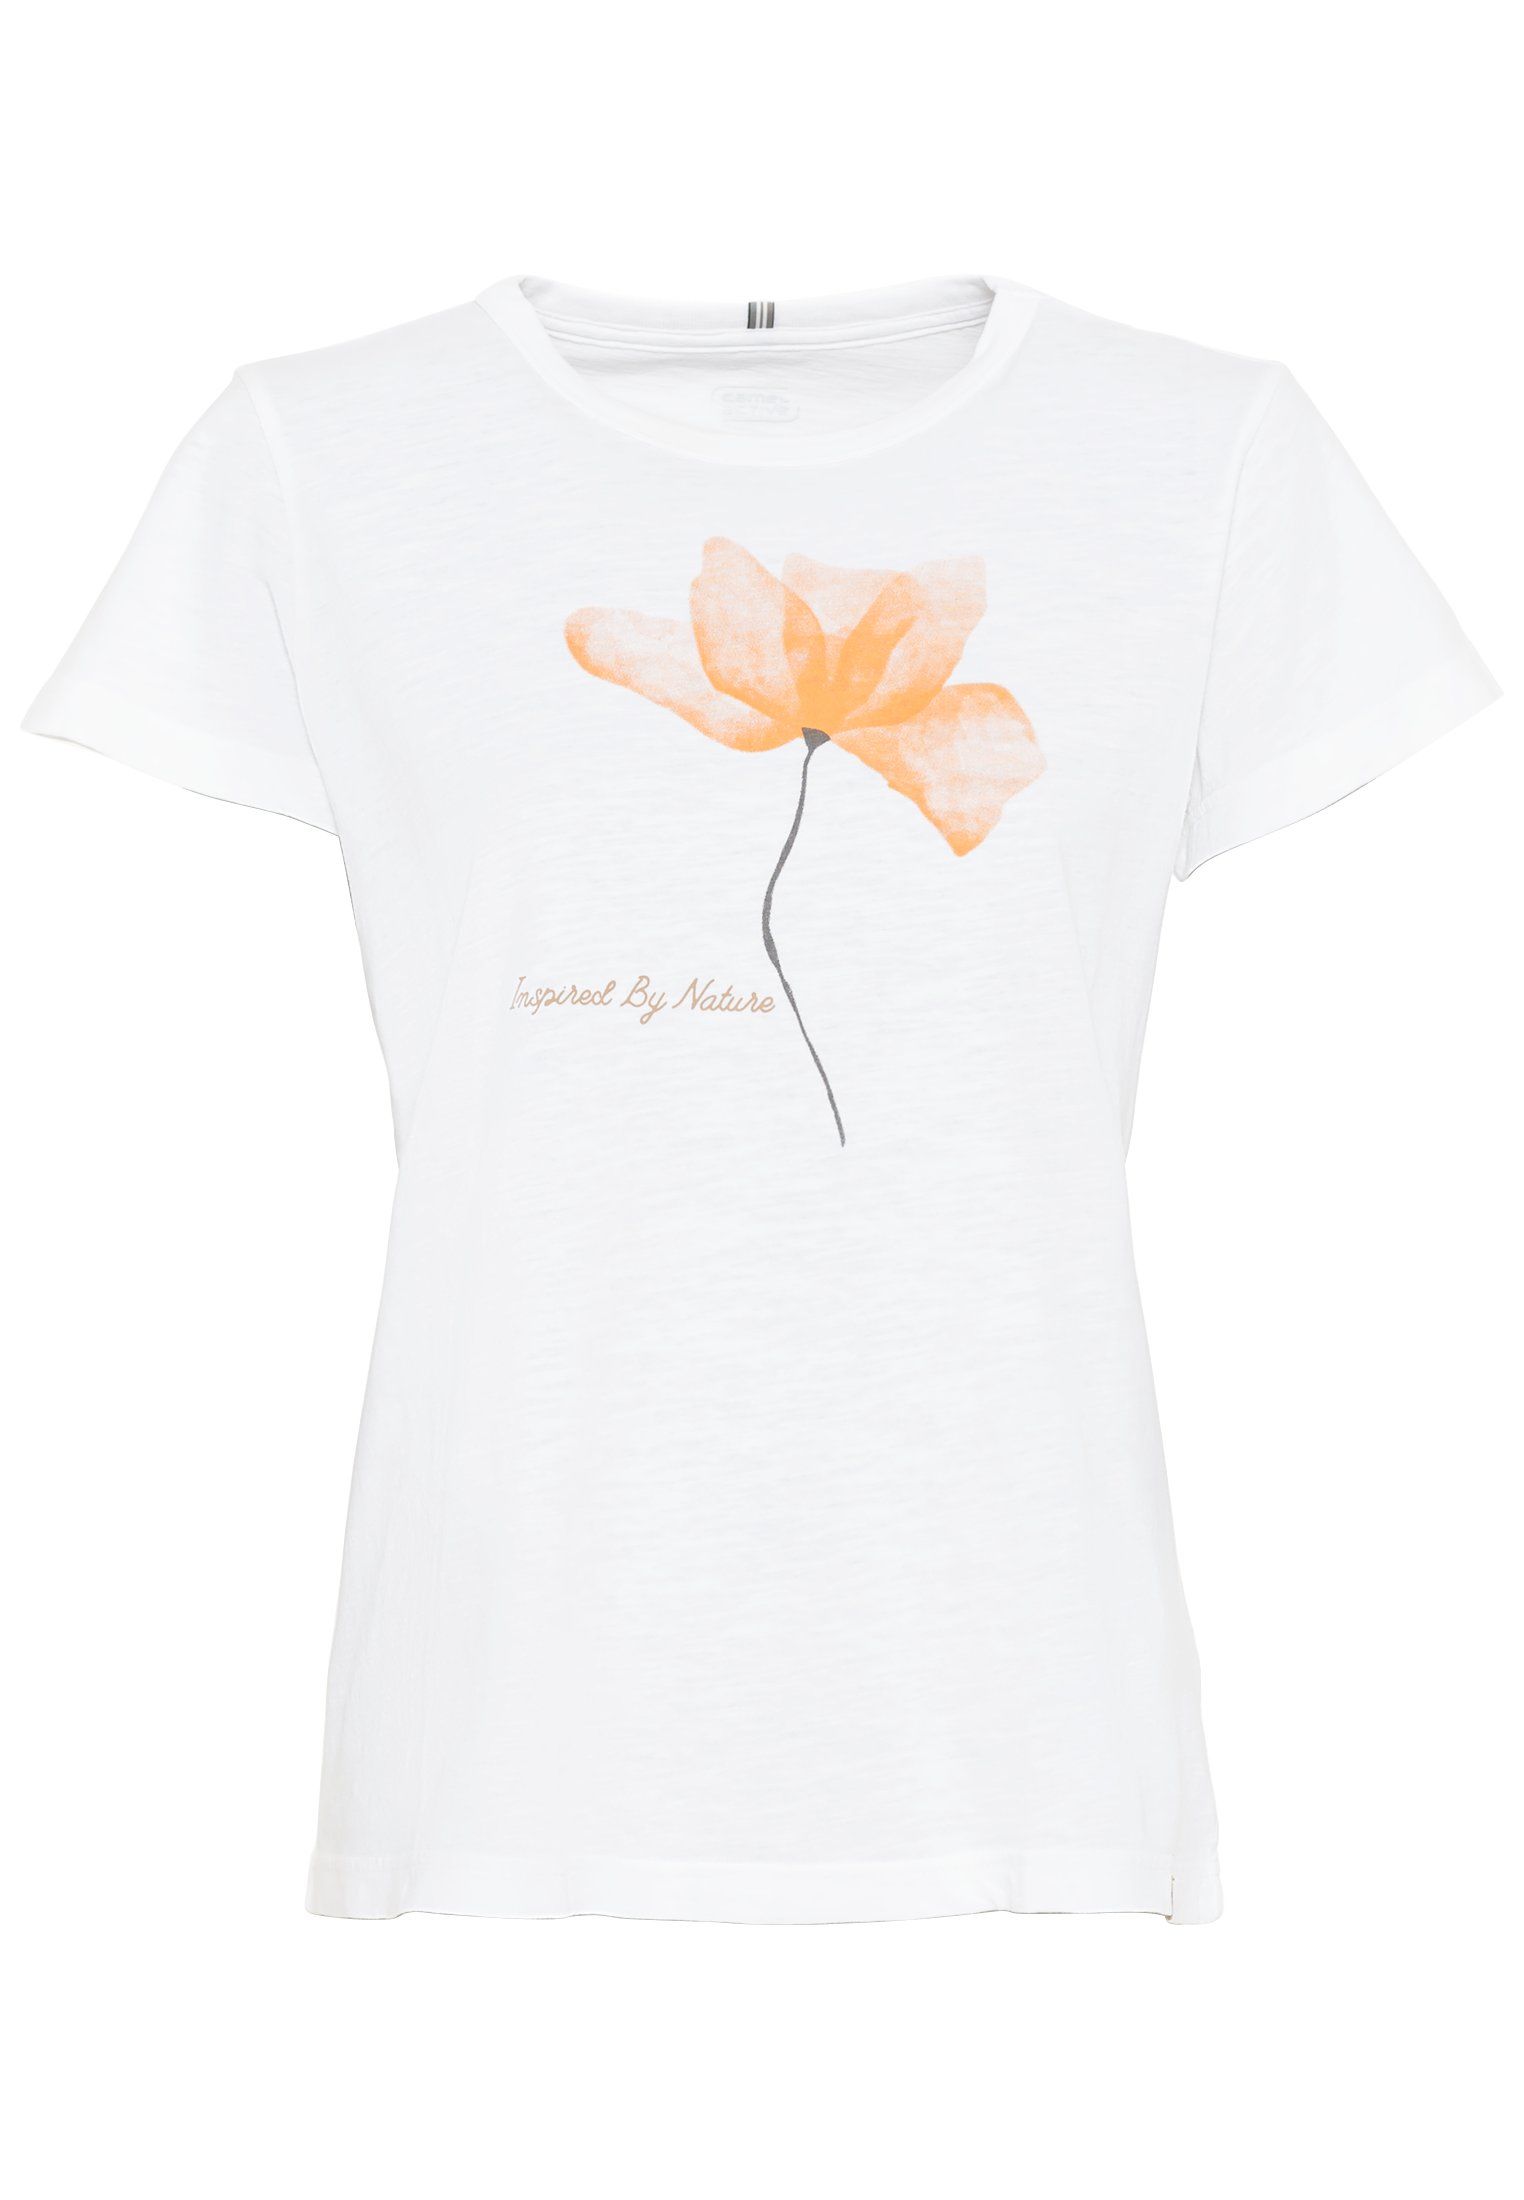 Flower Print Shirt